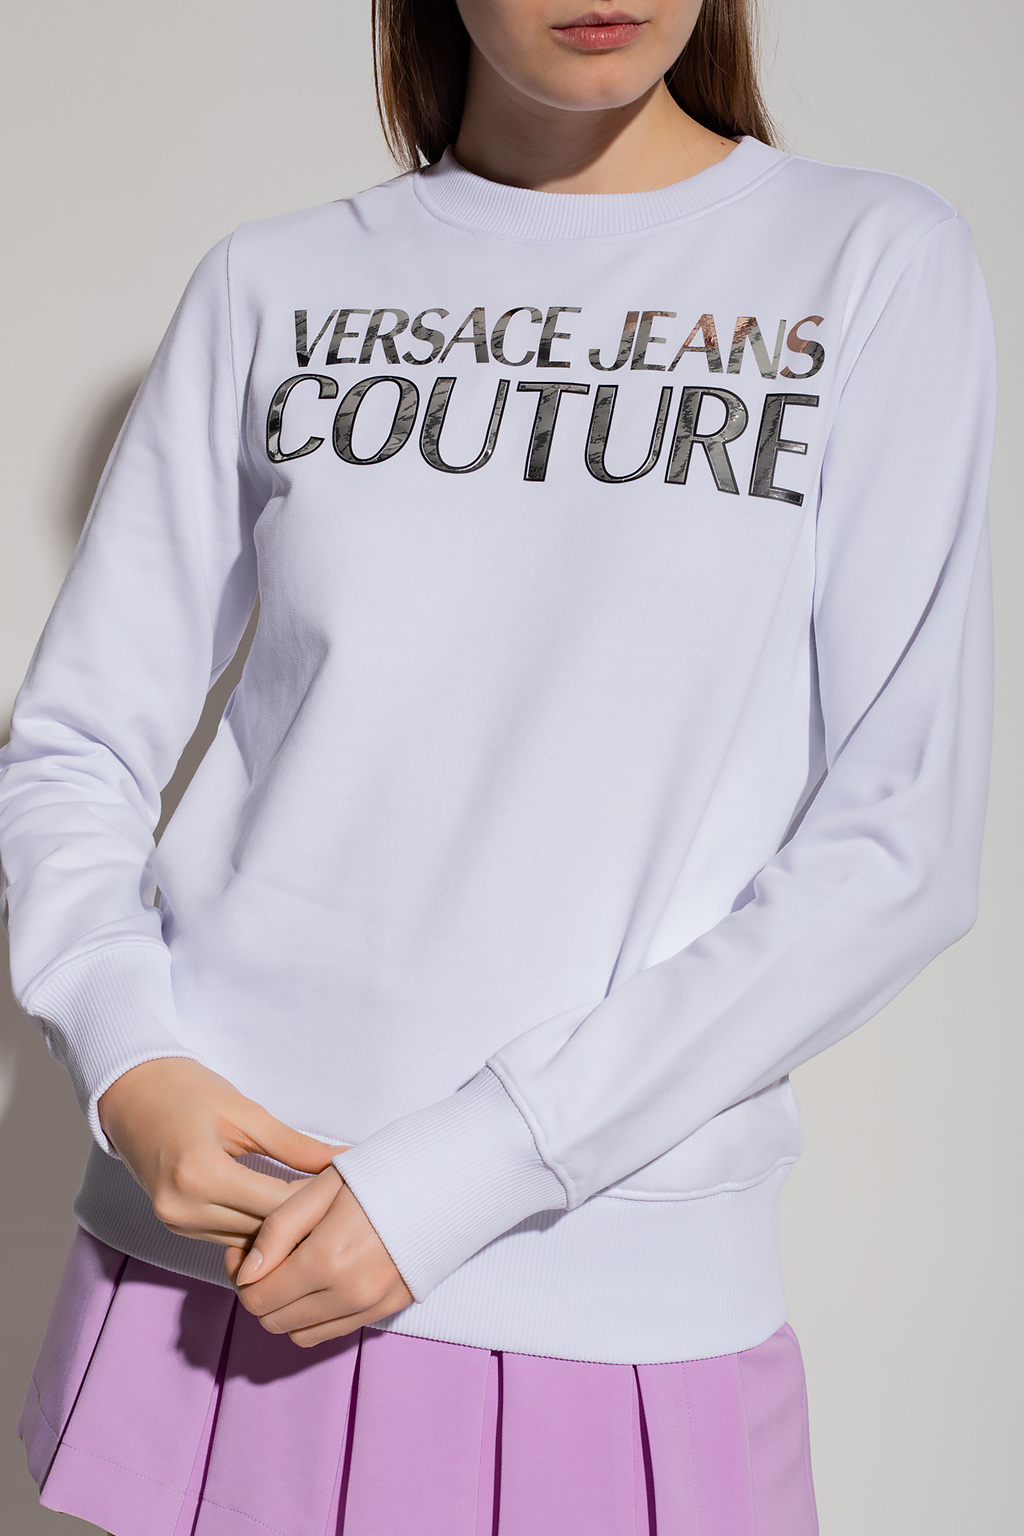 Versace Jeans Couture Mastermind Japan skull print crew neck sweatshirt